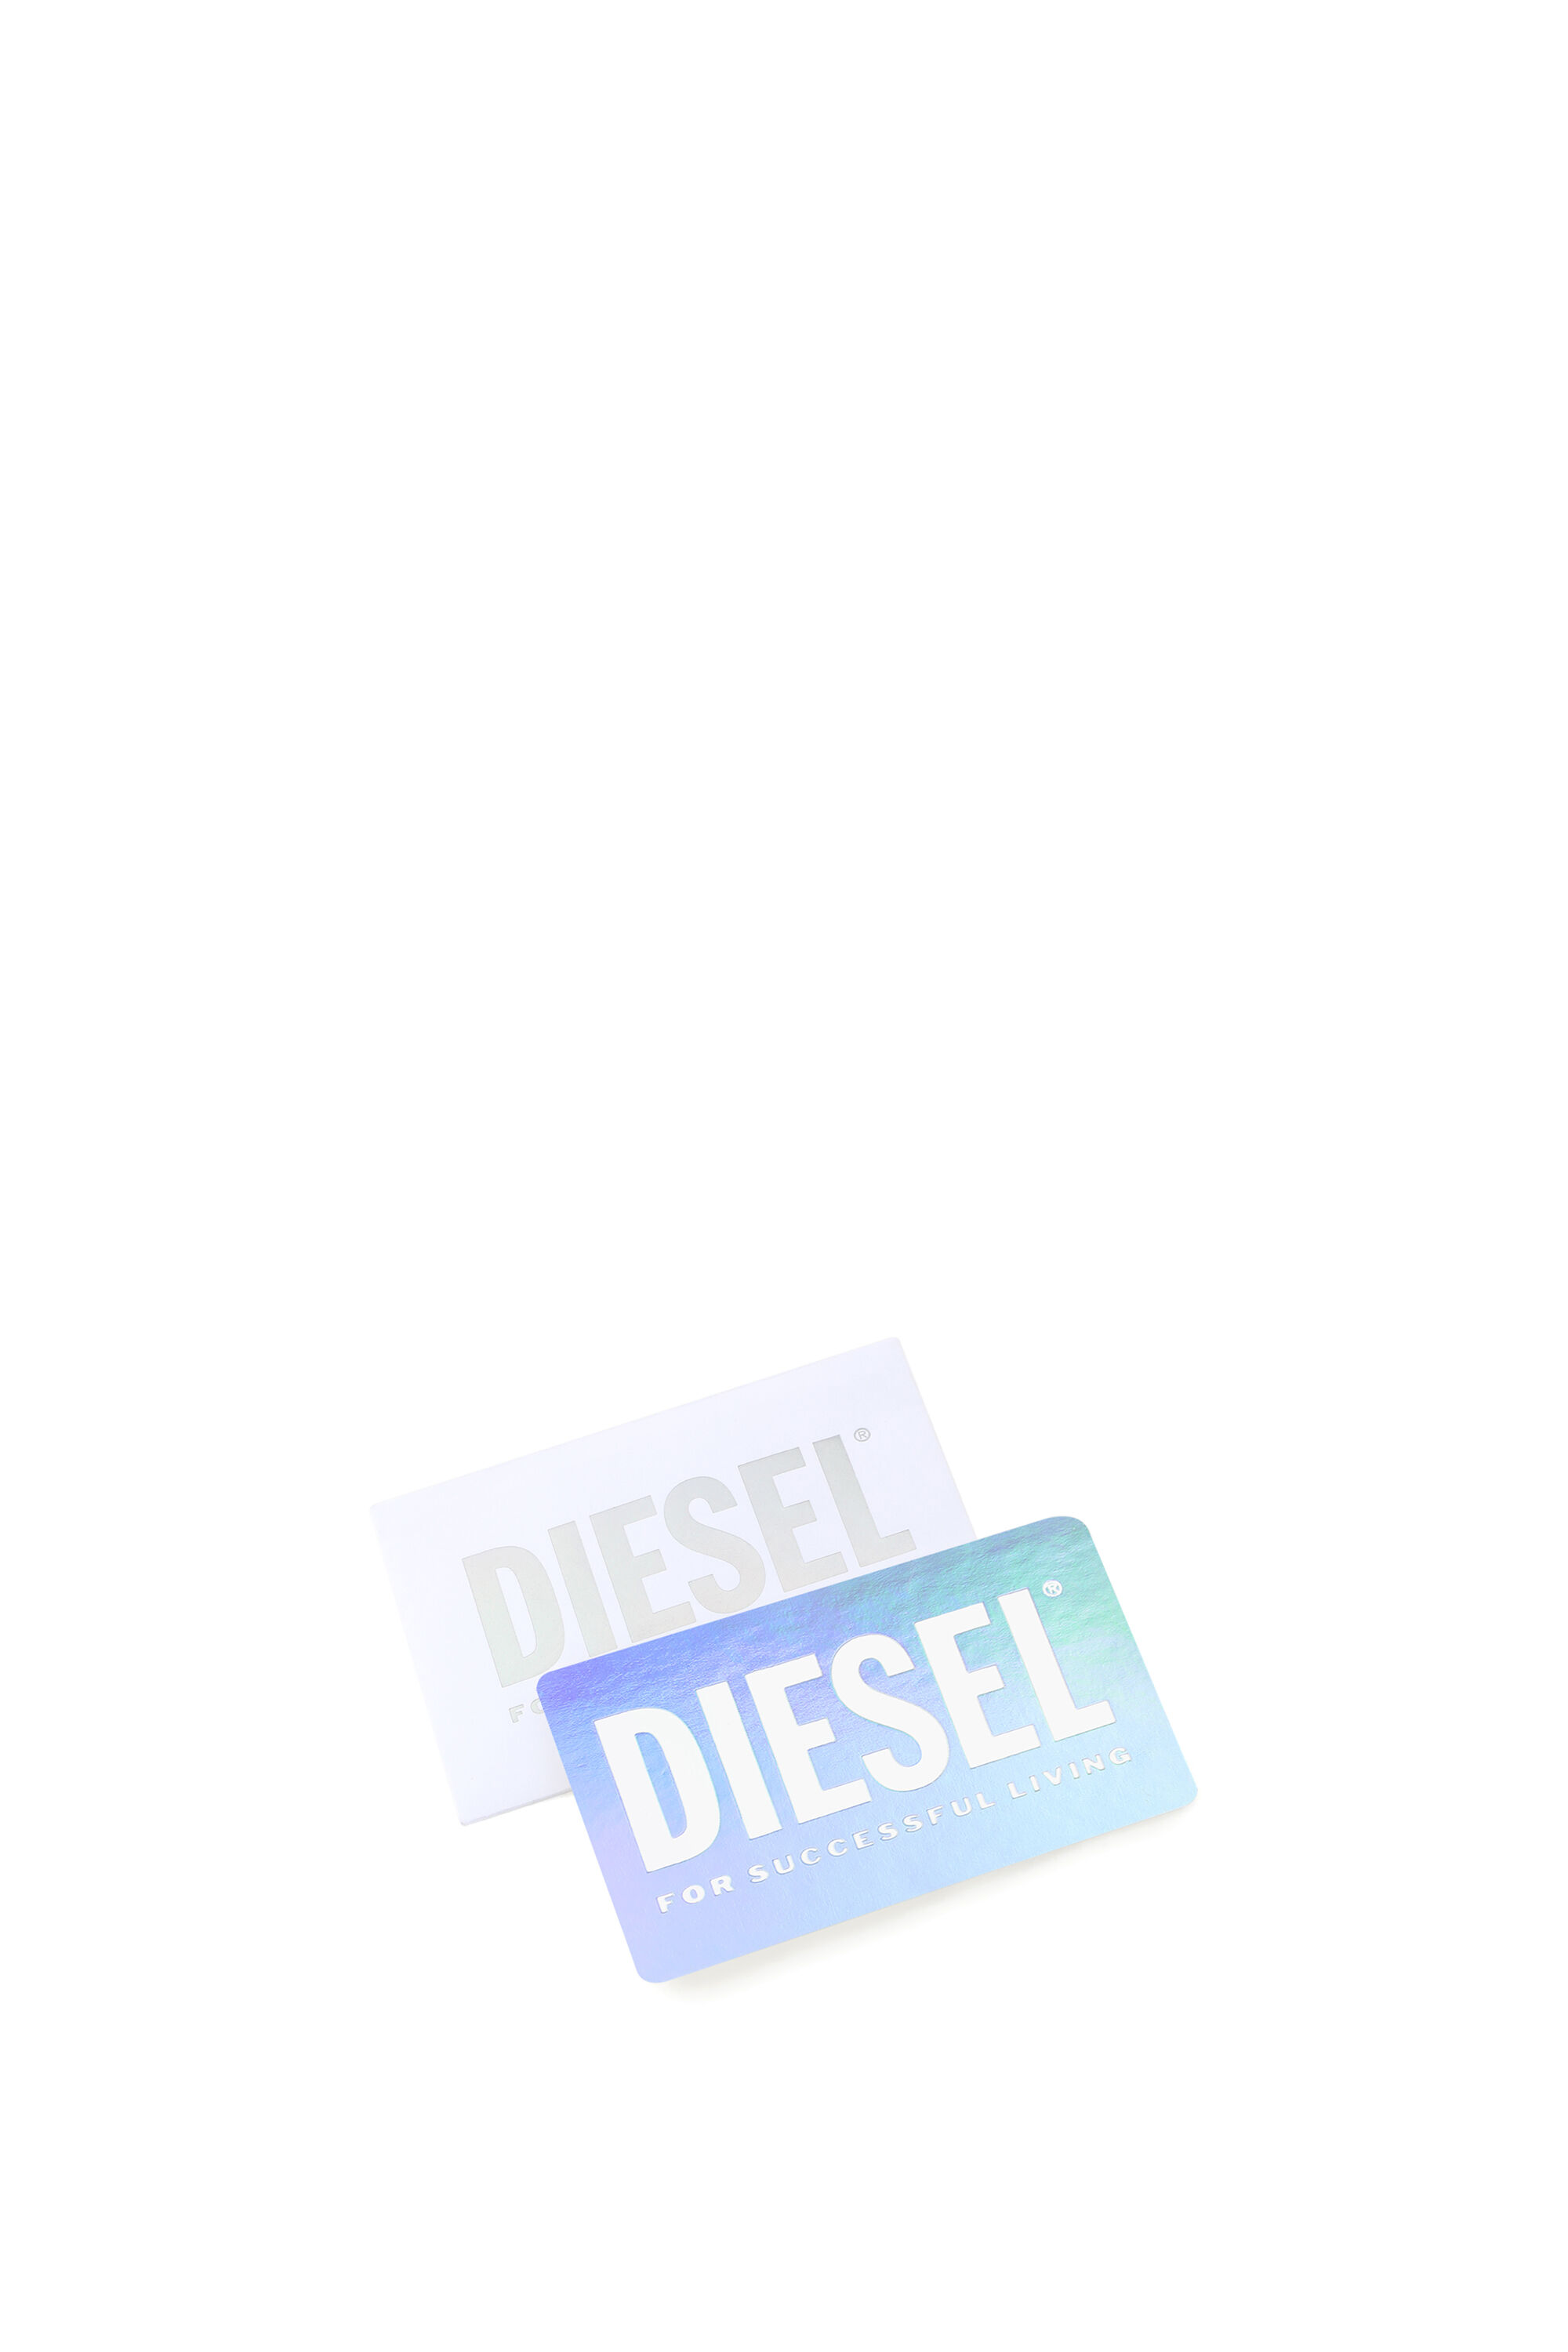 Diesel - Gift card, White - Image 3